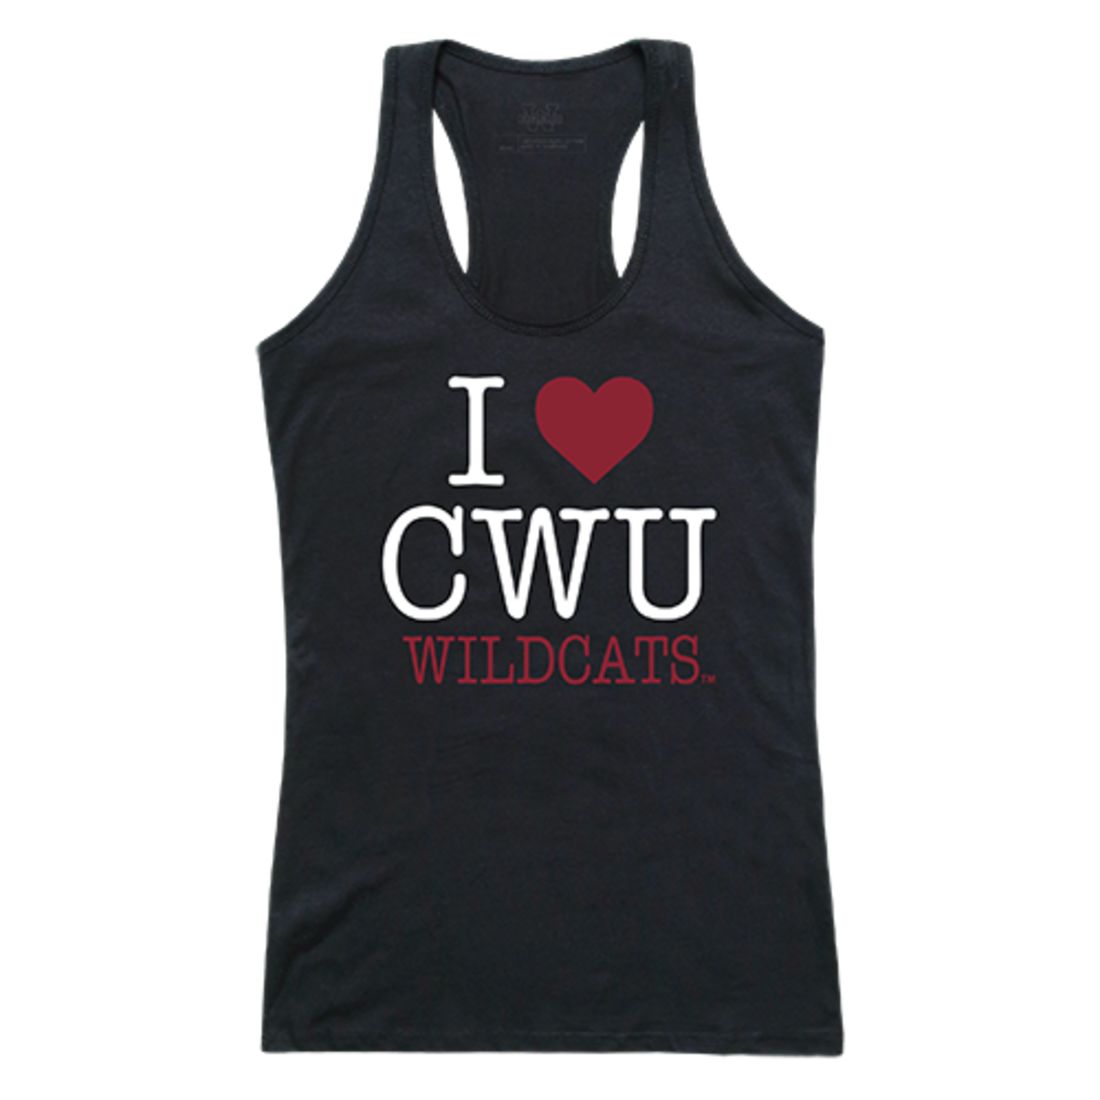 CWU Central Washington University Wildcats Womens Love Tank Top Tee T-Shirt Black-Campus-Wardrobe